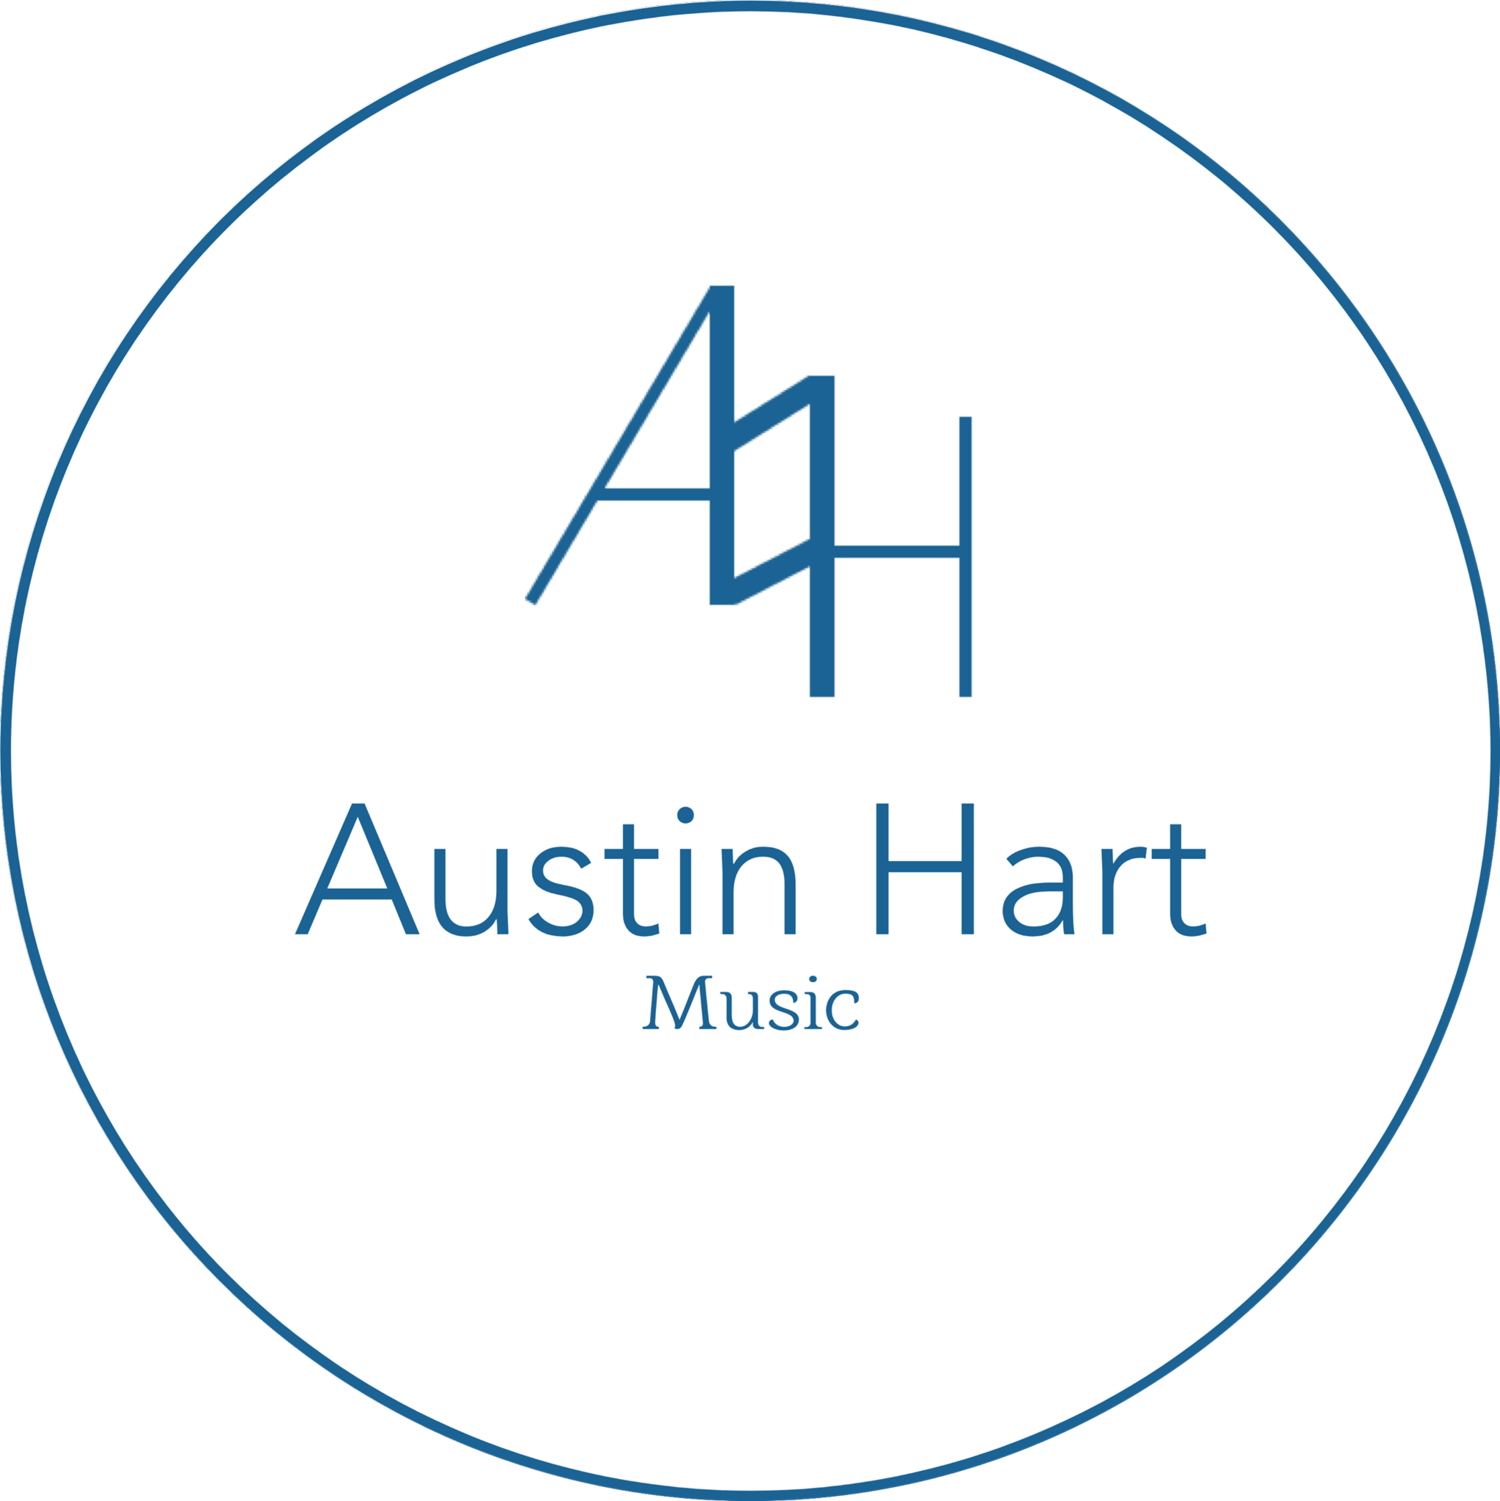 Austin Hart Music